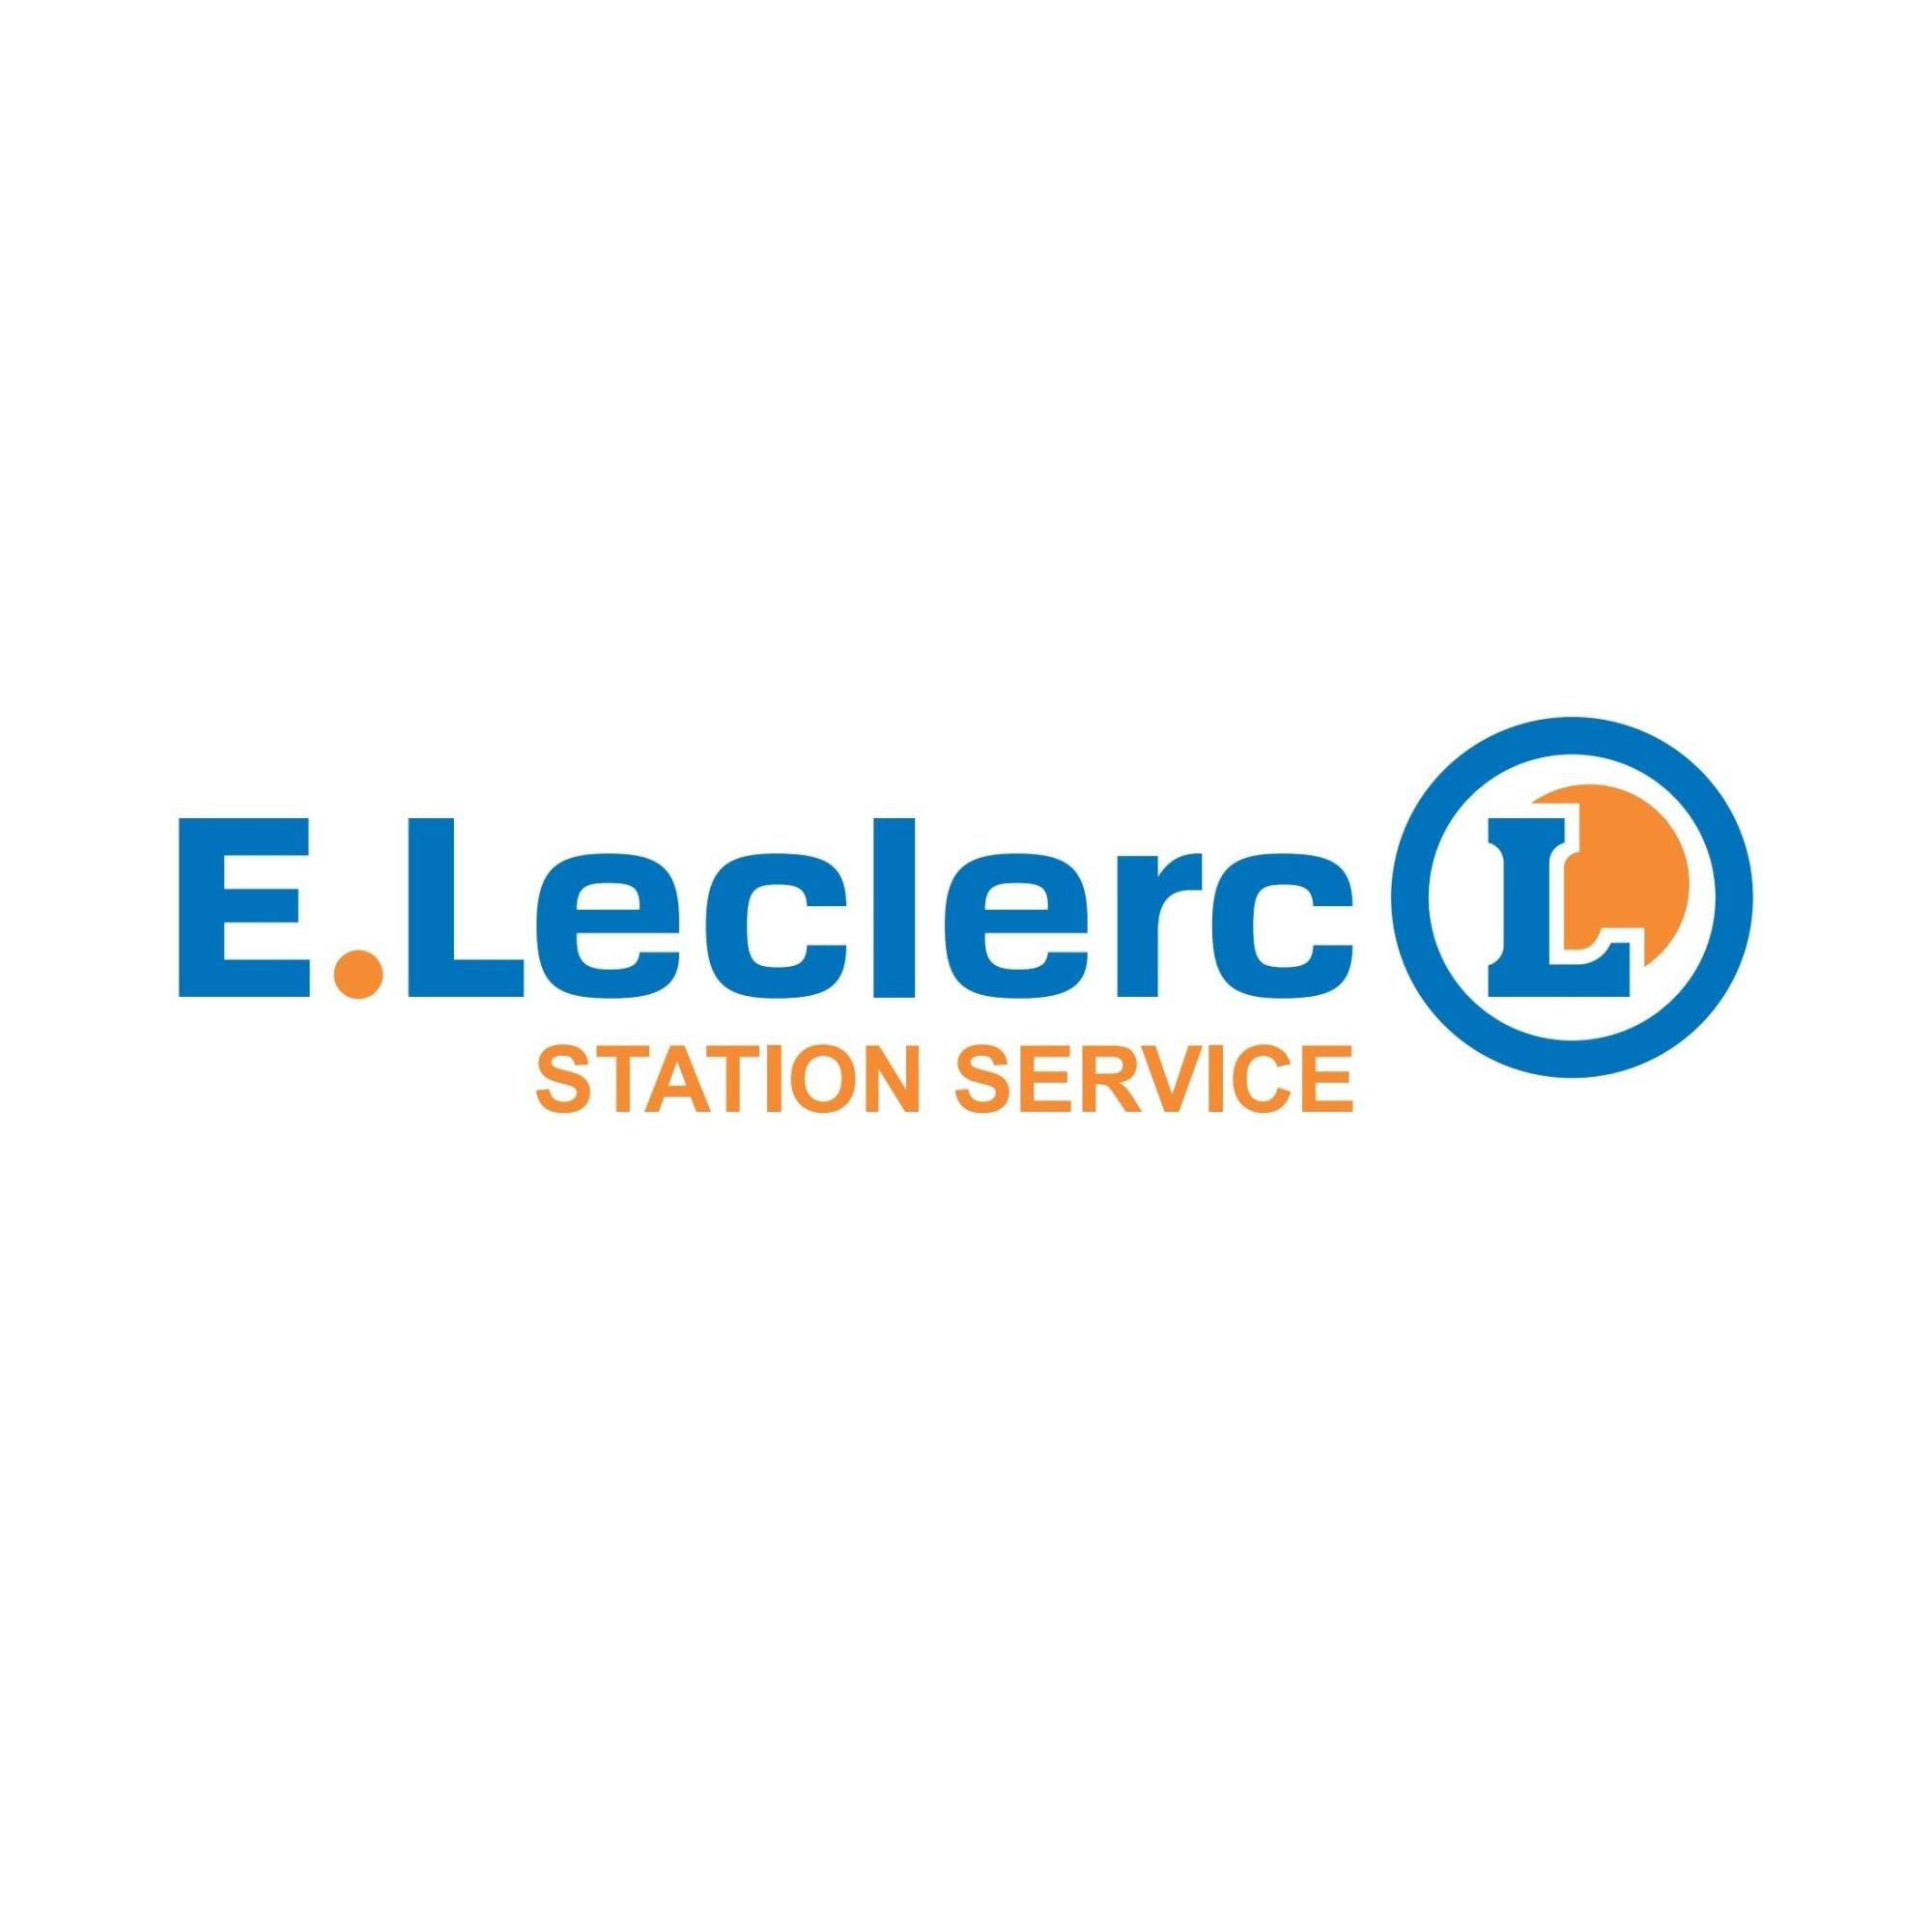 E.leclerc Station Service Bergerac